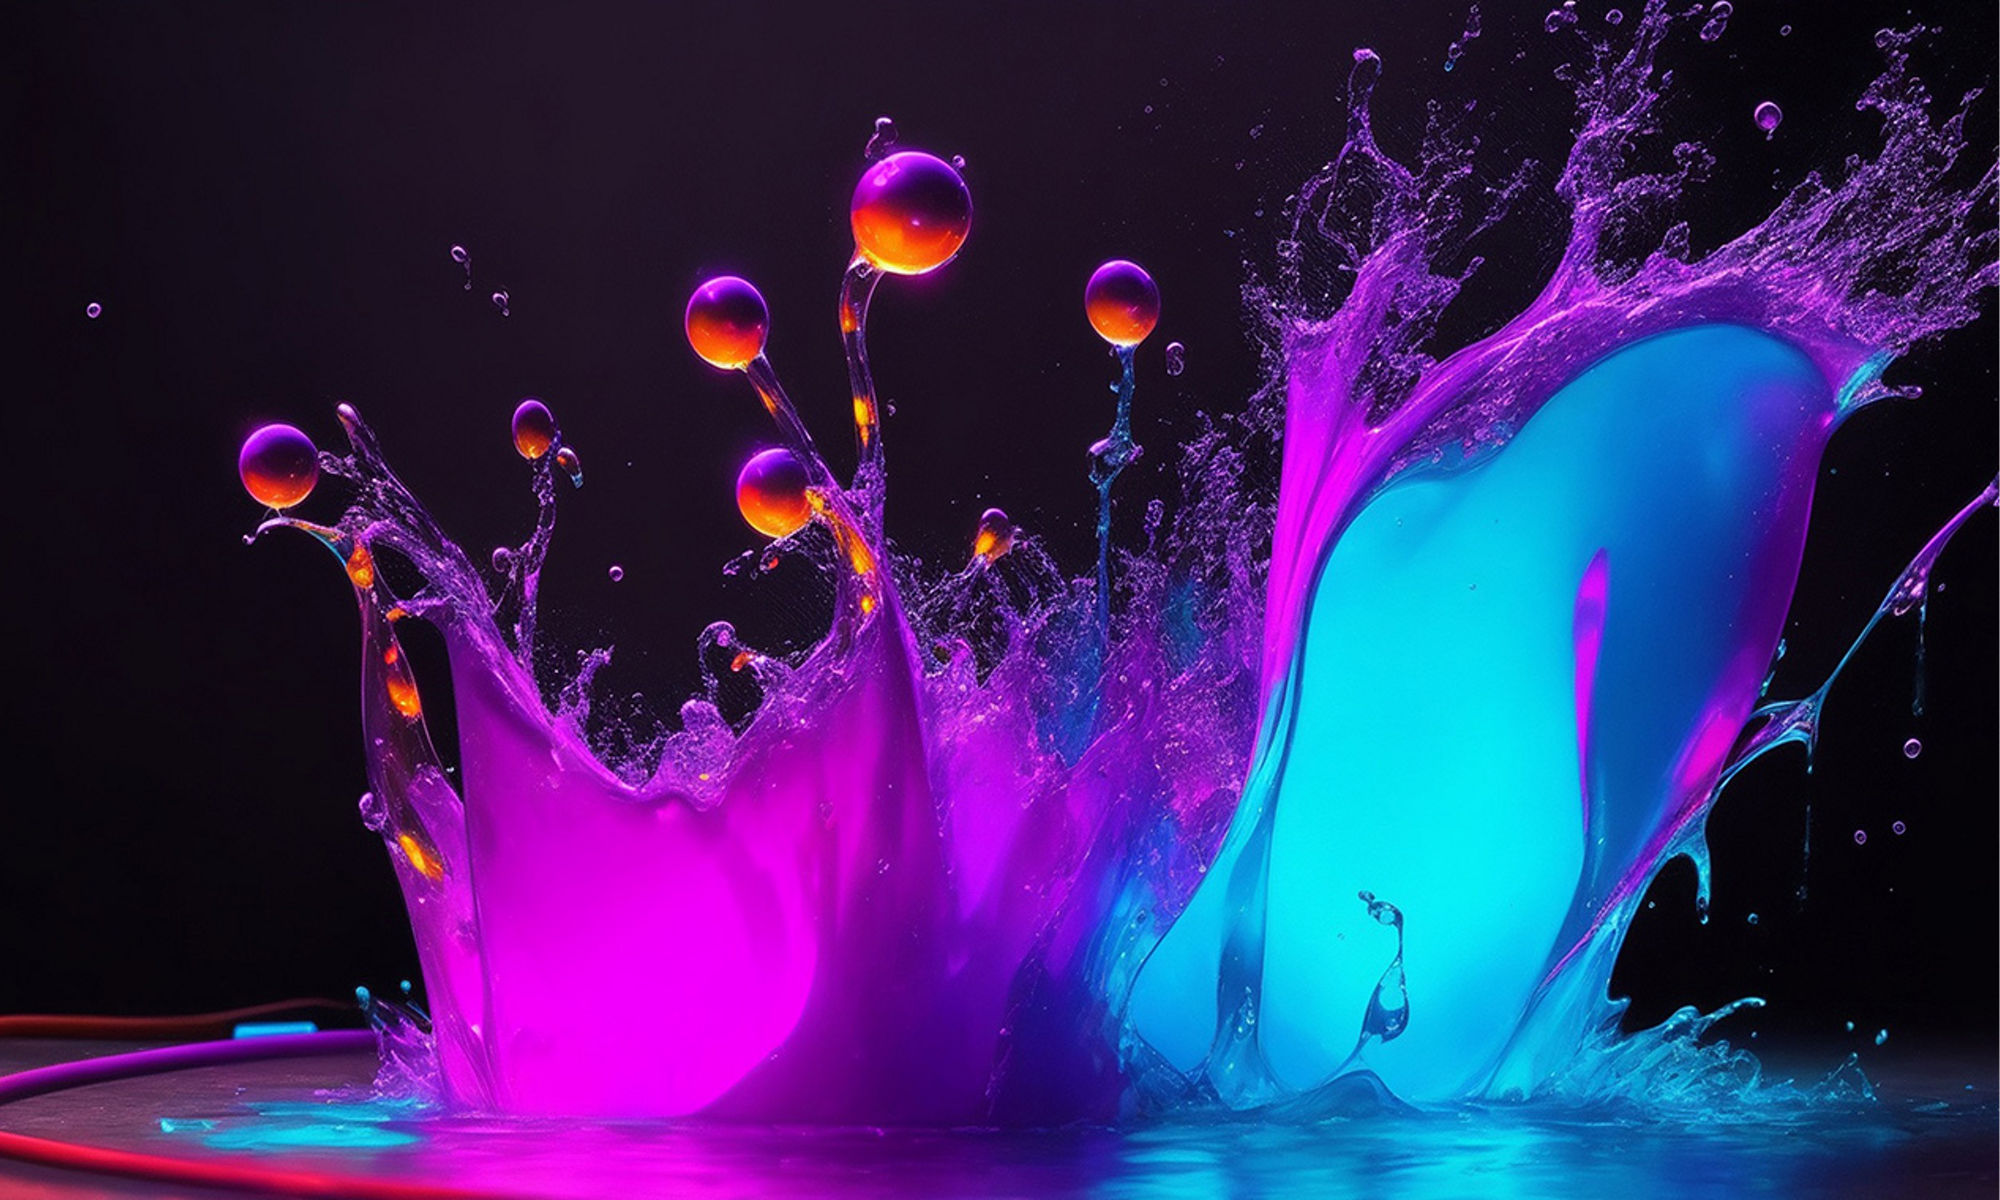 Splash of water on neon background